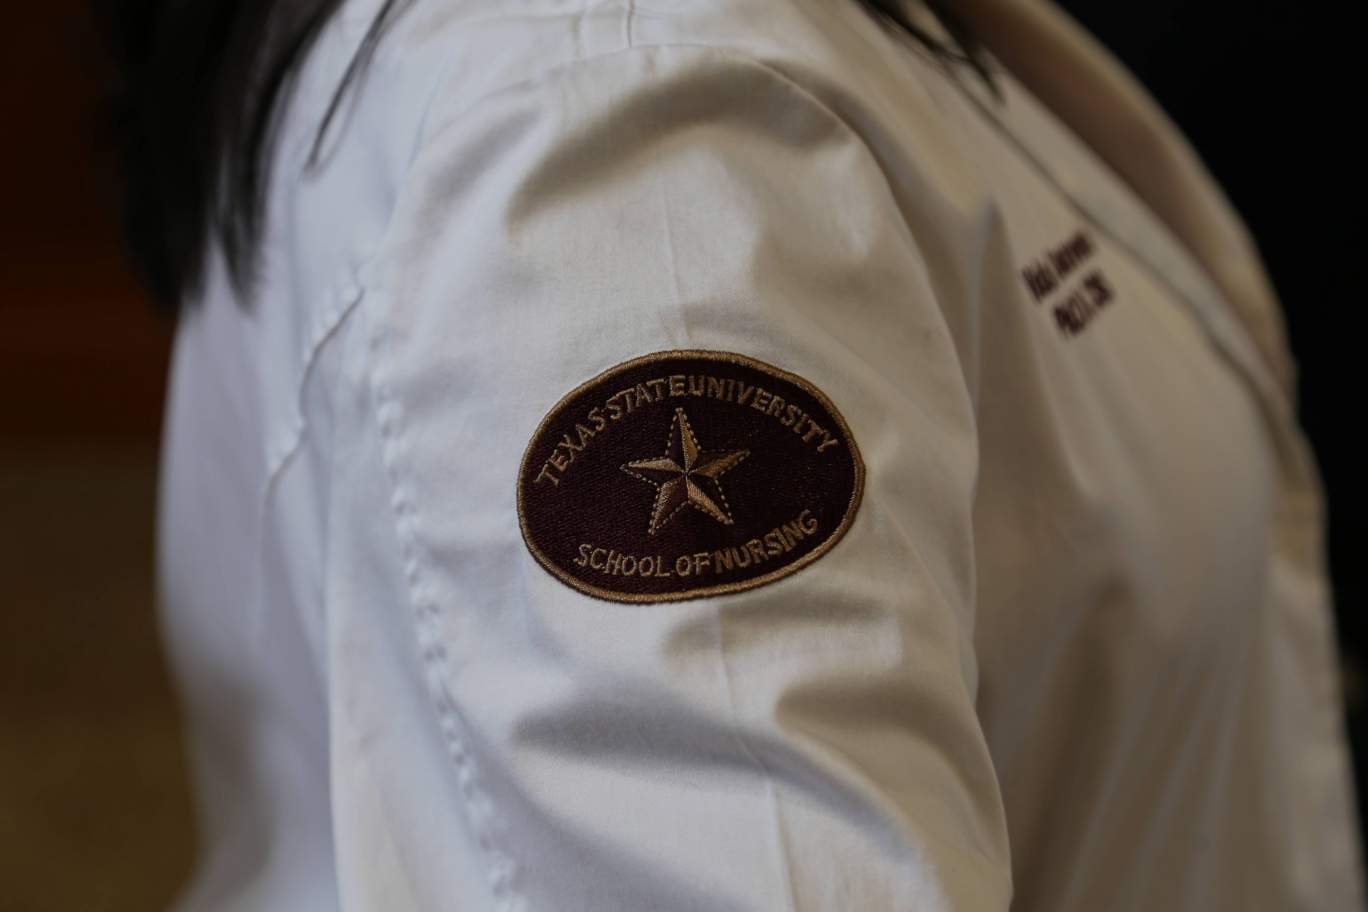 School of Nursing arm patch on white lab coat